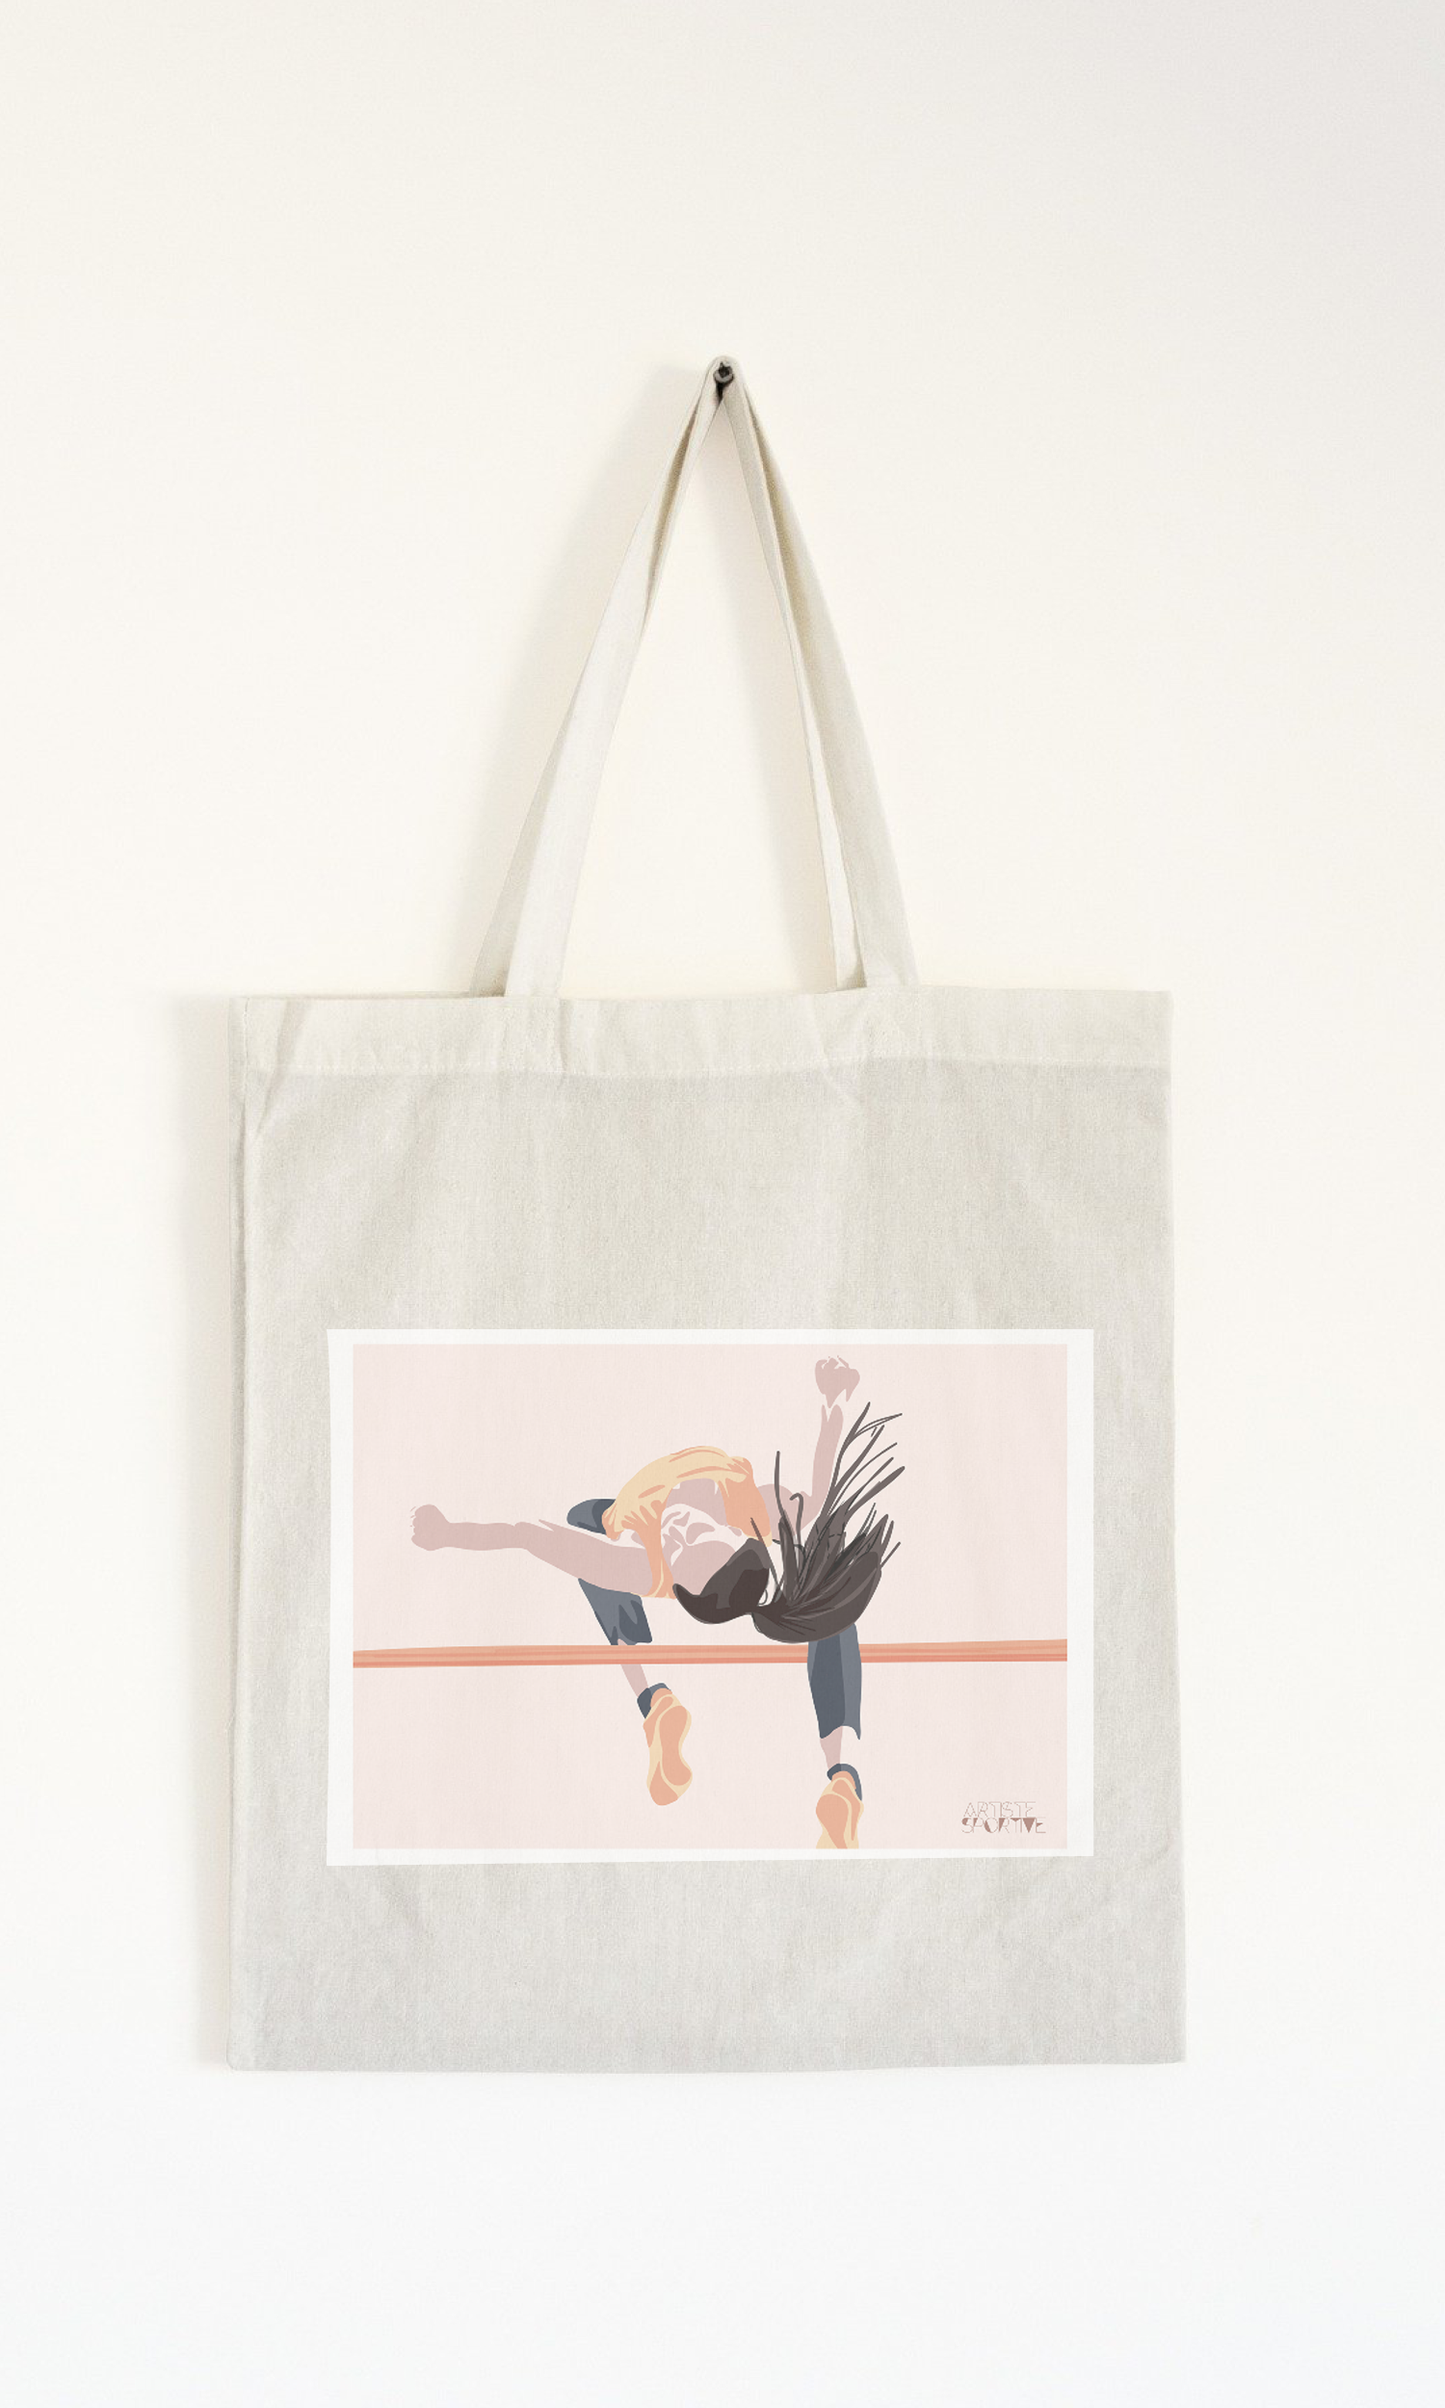 Tote bag or athletic bag "women's high jump"